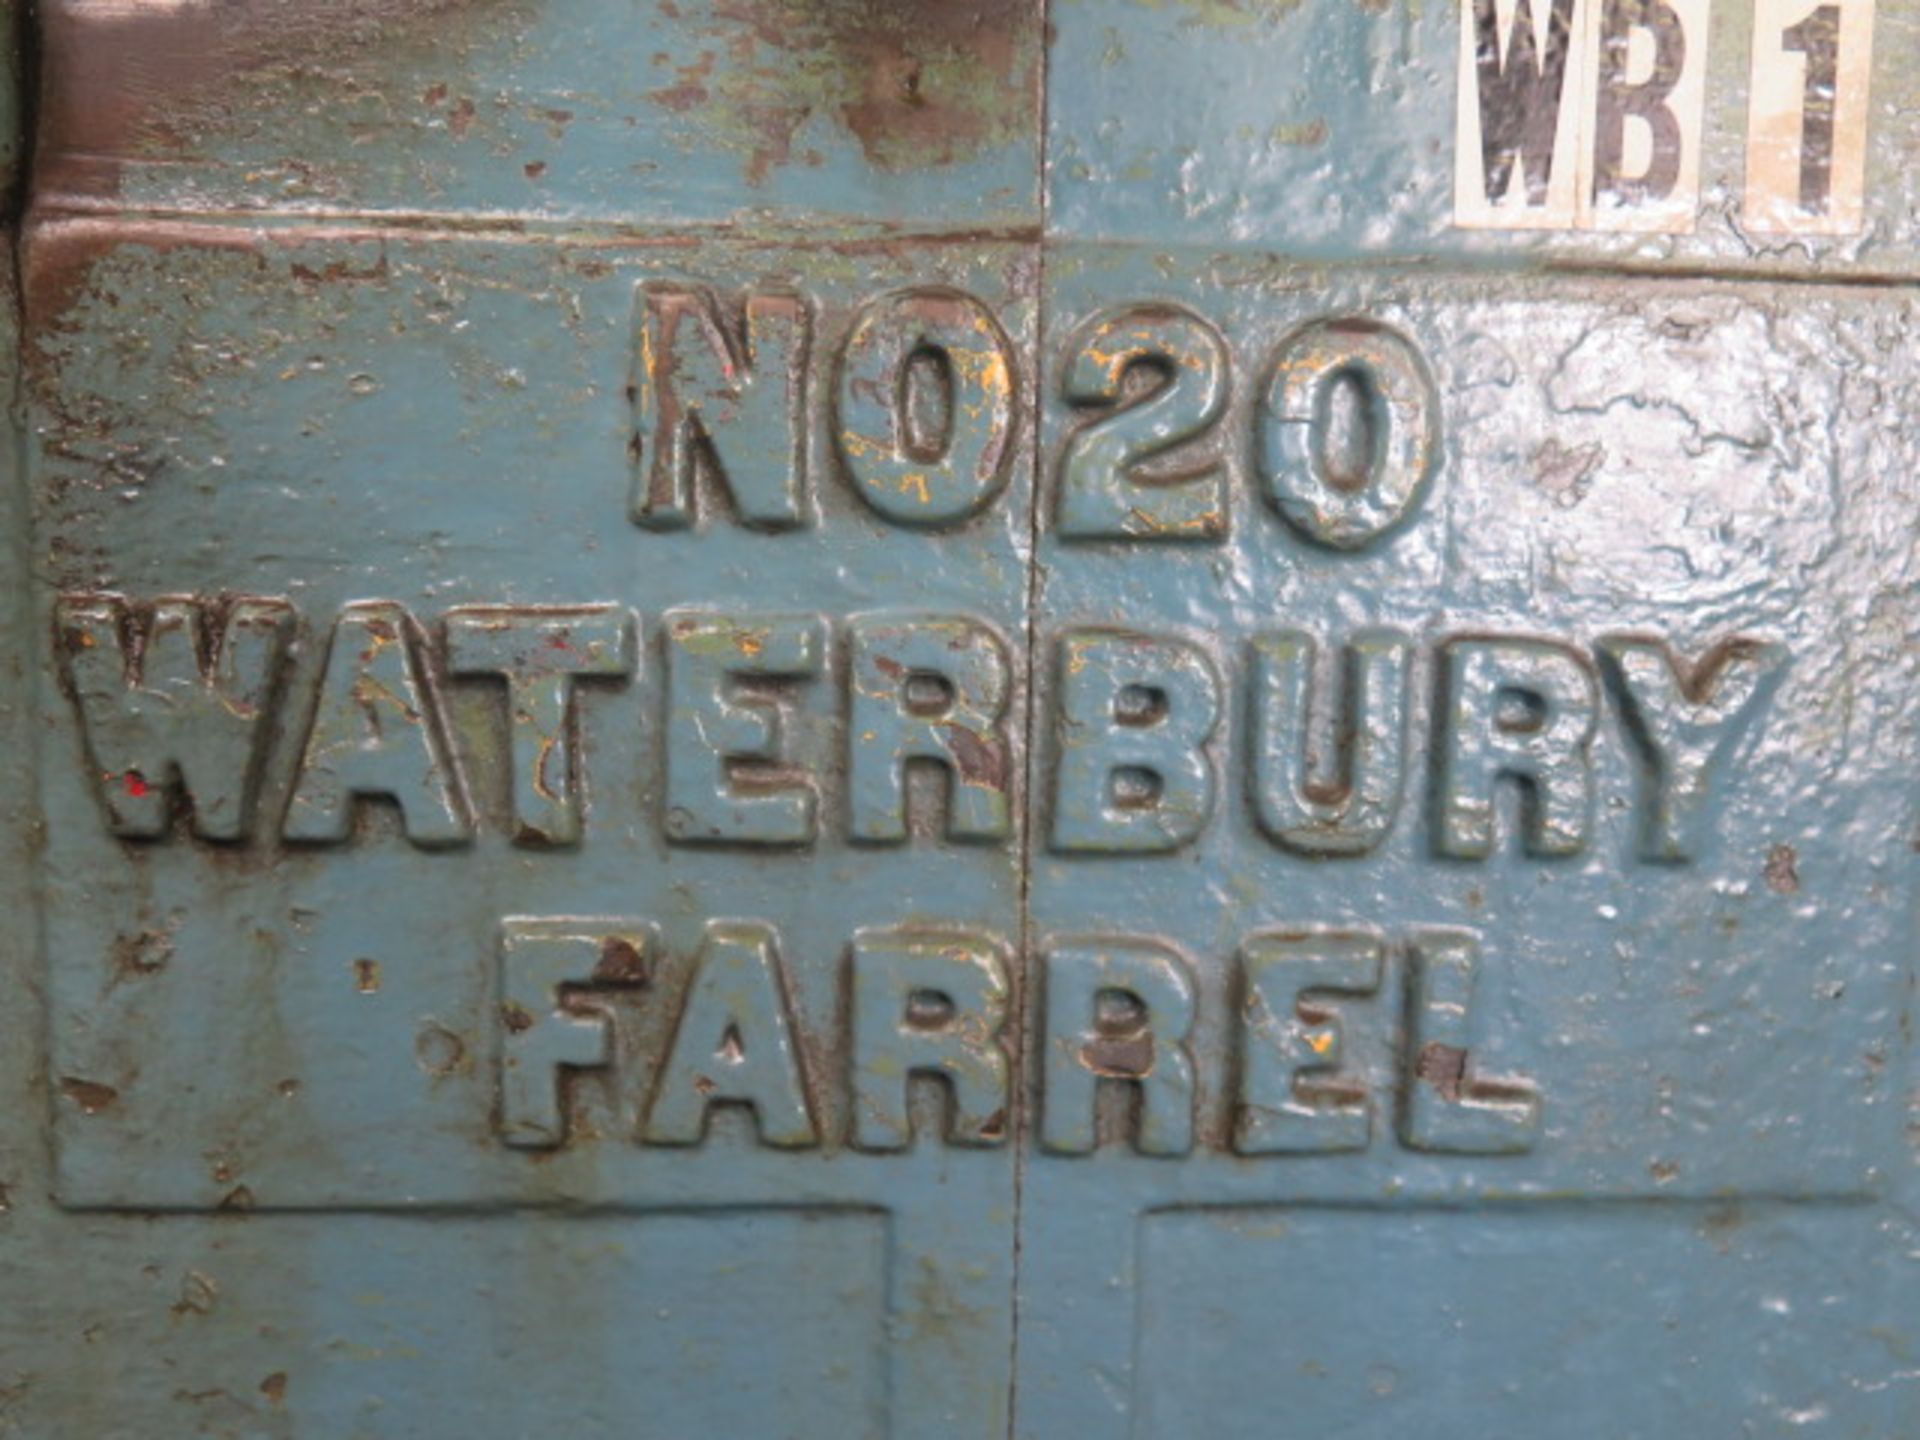 Waterbury Farrel No. 20 Thread Crush Rolling Machine s/n 123270-968 w/ Controlled Speed - Image 7 of 8